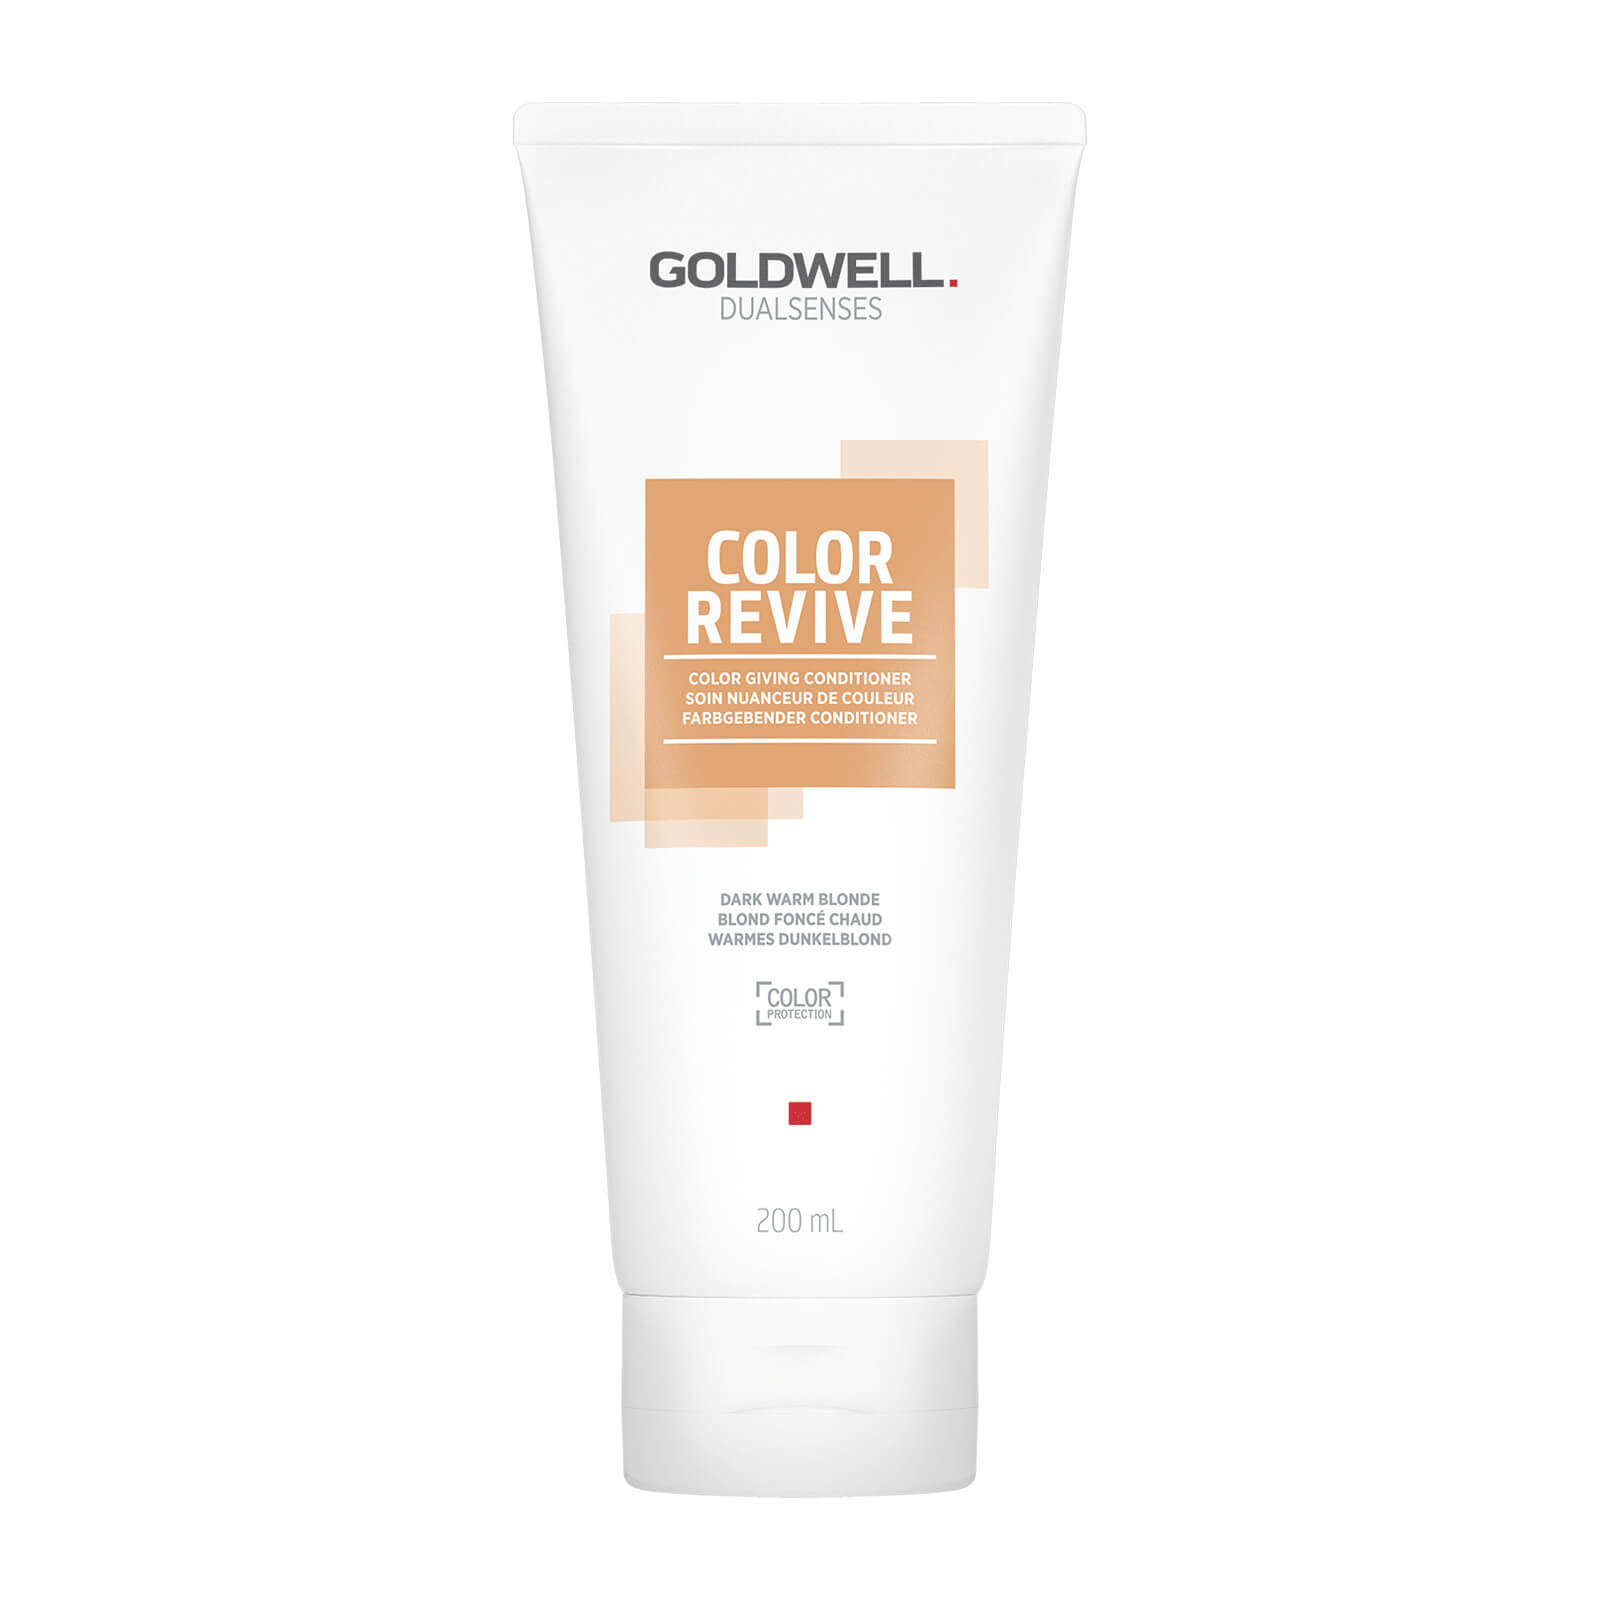 Goldwell Tónovací kondicionér Dark Warm Blonde Dualsenses Color Revive (Color Giving Condicioner) 200 ml